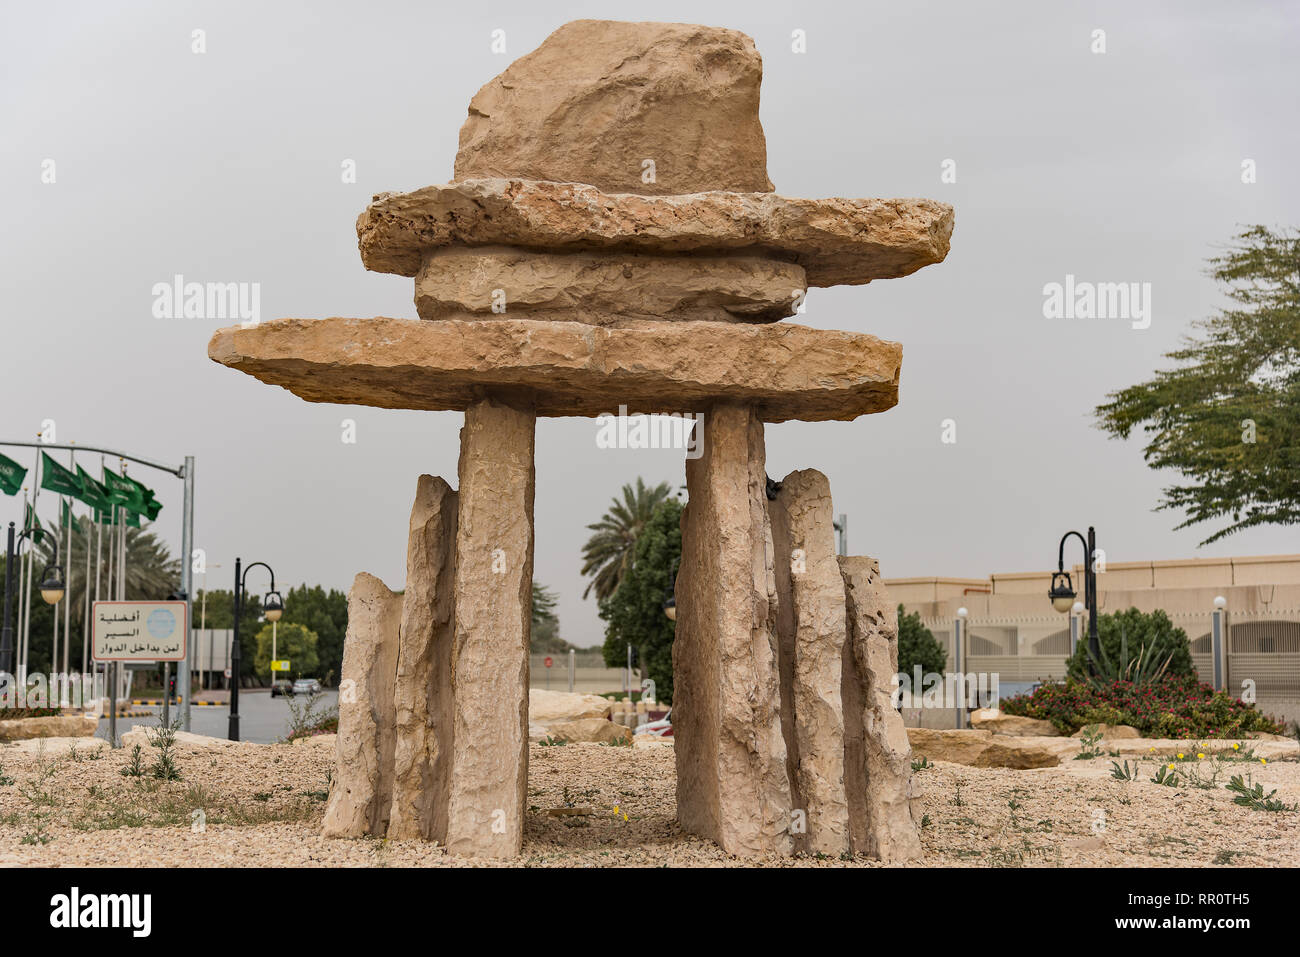 Inuksuk sculpture in Riyadh, Saudi Arabia Stock Photo